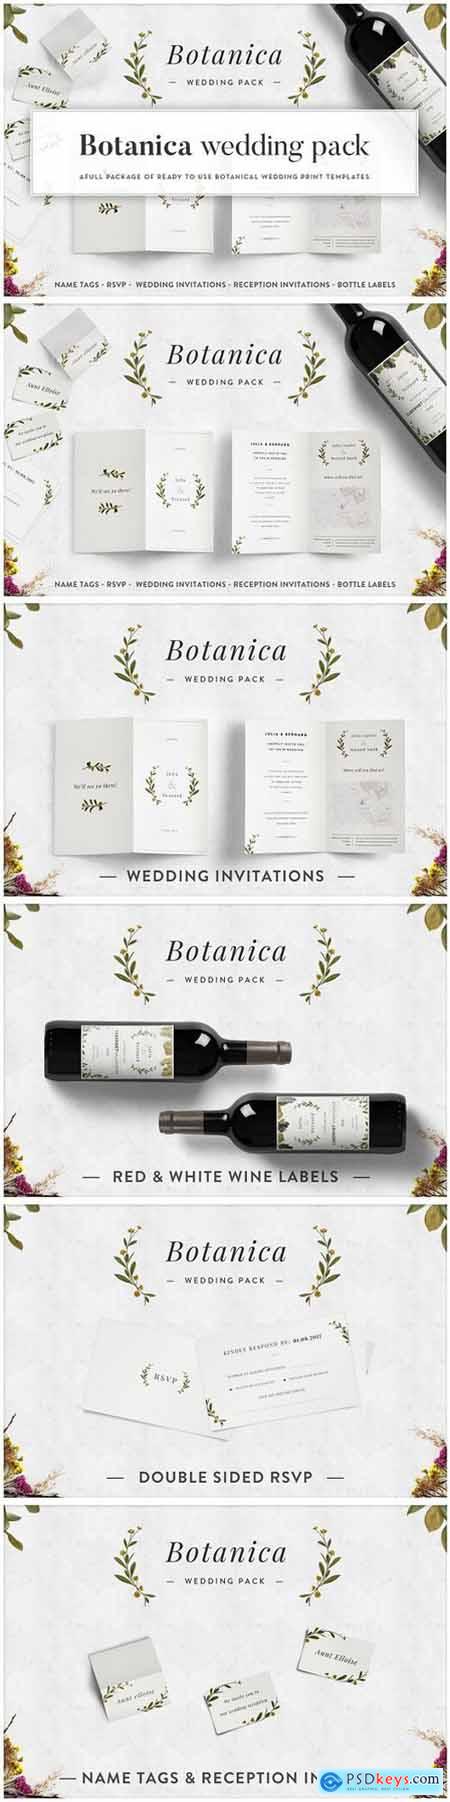 Botanica - Wedding Pack print